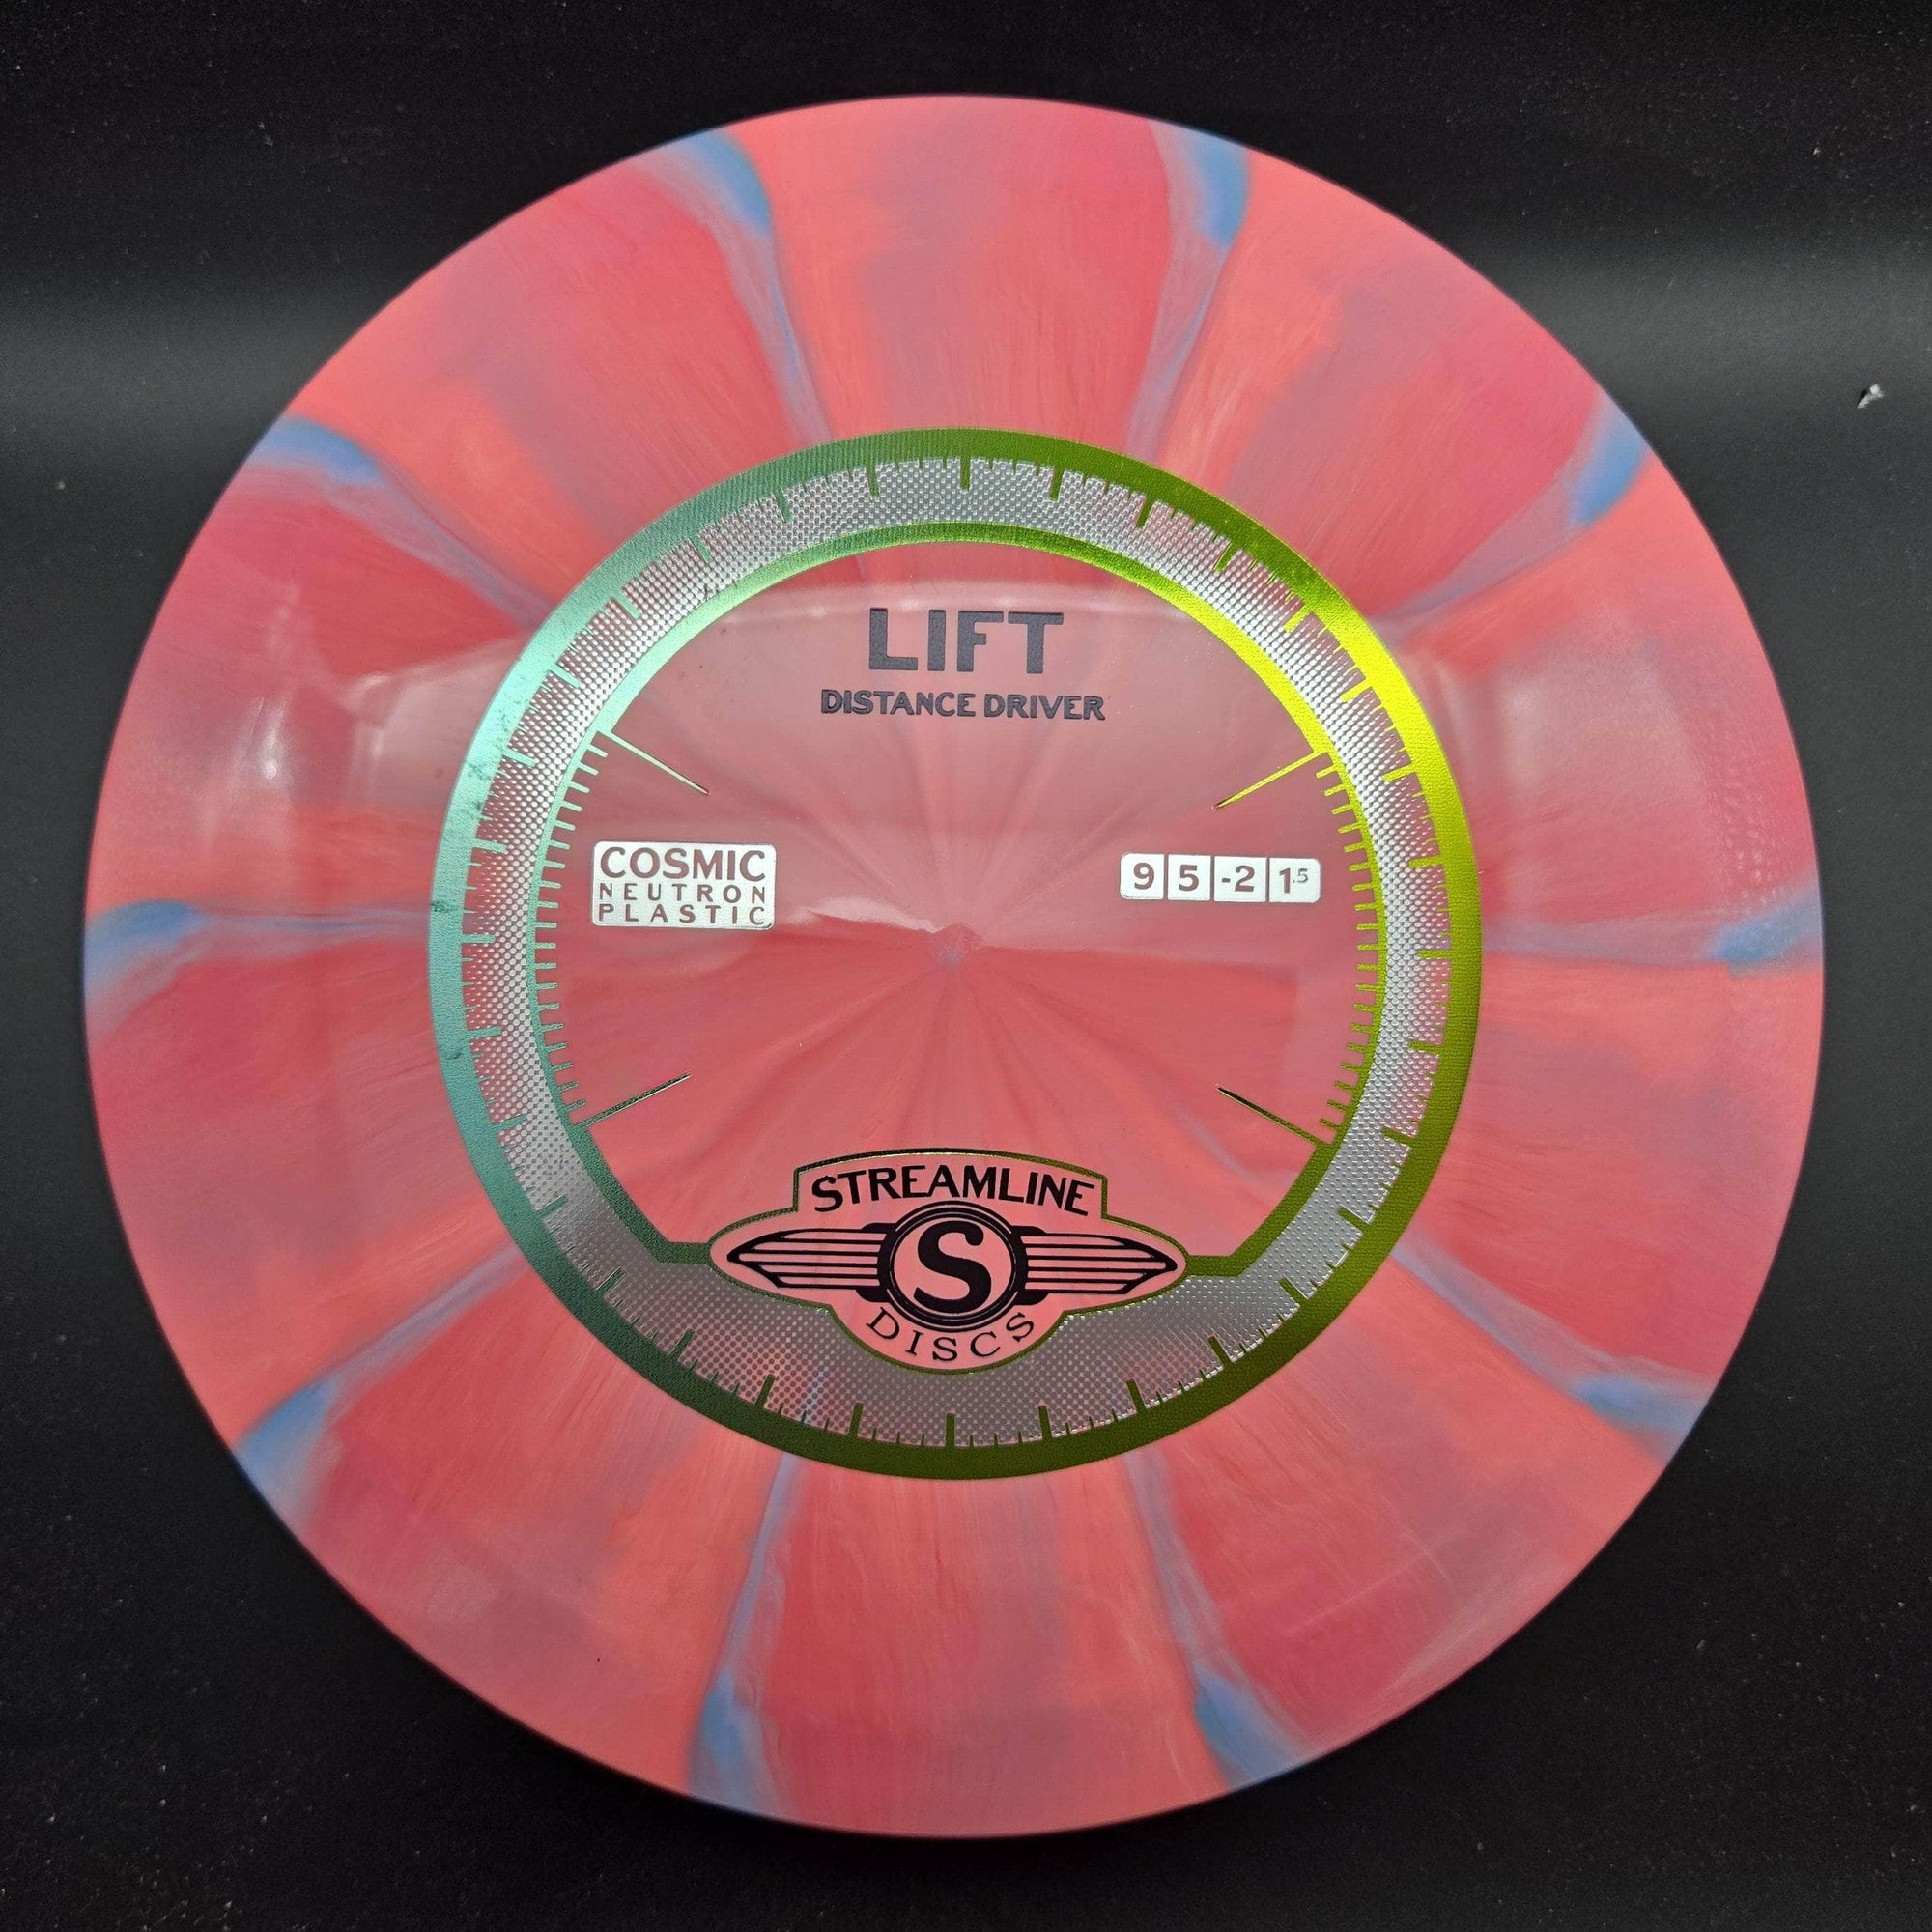 Streamline Fairway Driver Pink Blue/Green Stamp 175g Lift, Cosmic Neutron Plastic